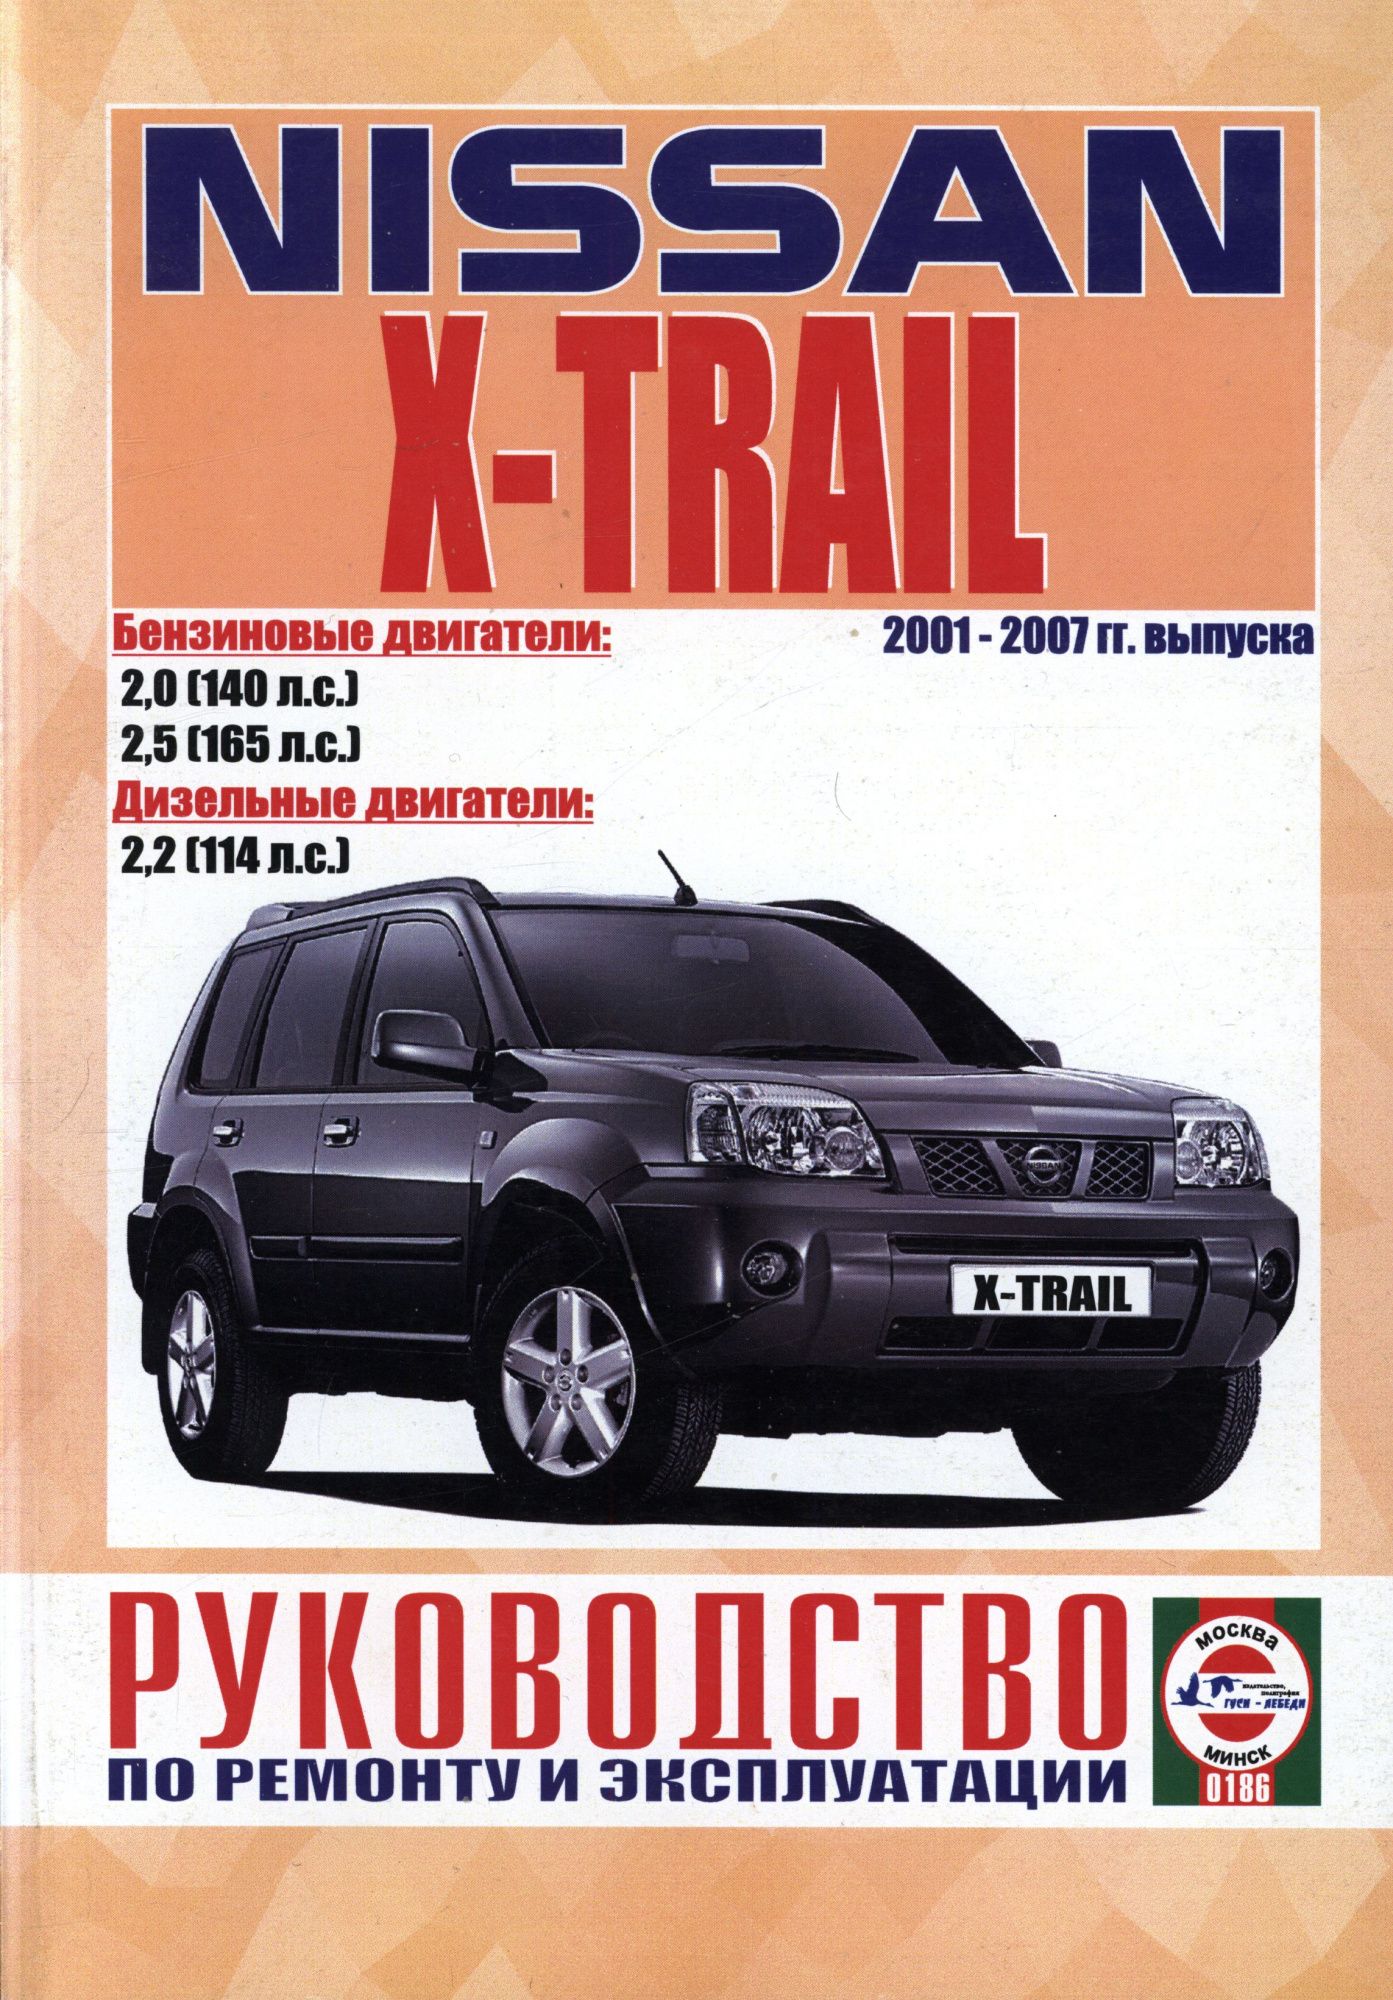 Nissan X Trail 2001-2007гг. Книга, руководство по ремонту и эксплуатации. Чижовка